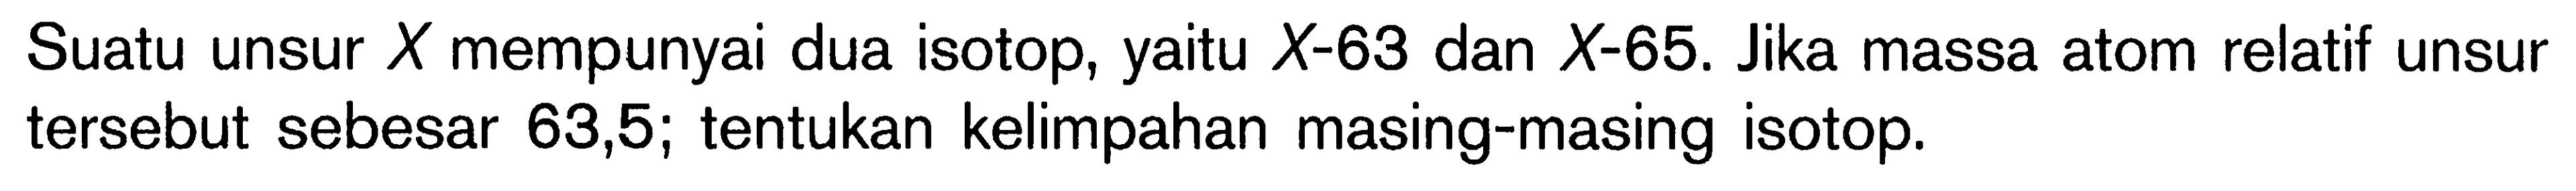 Suatu unsur X mempunyai dua isotop, yaitu X-63 dan X-65. Jika massa atom relatif unsur tersebut sebesar 63,5; tentukan kelimpahan masing-masing isotop.